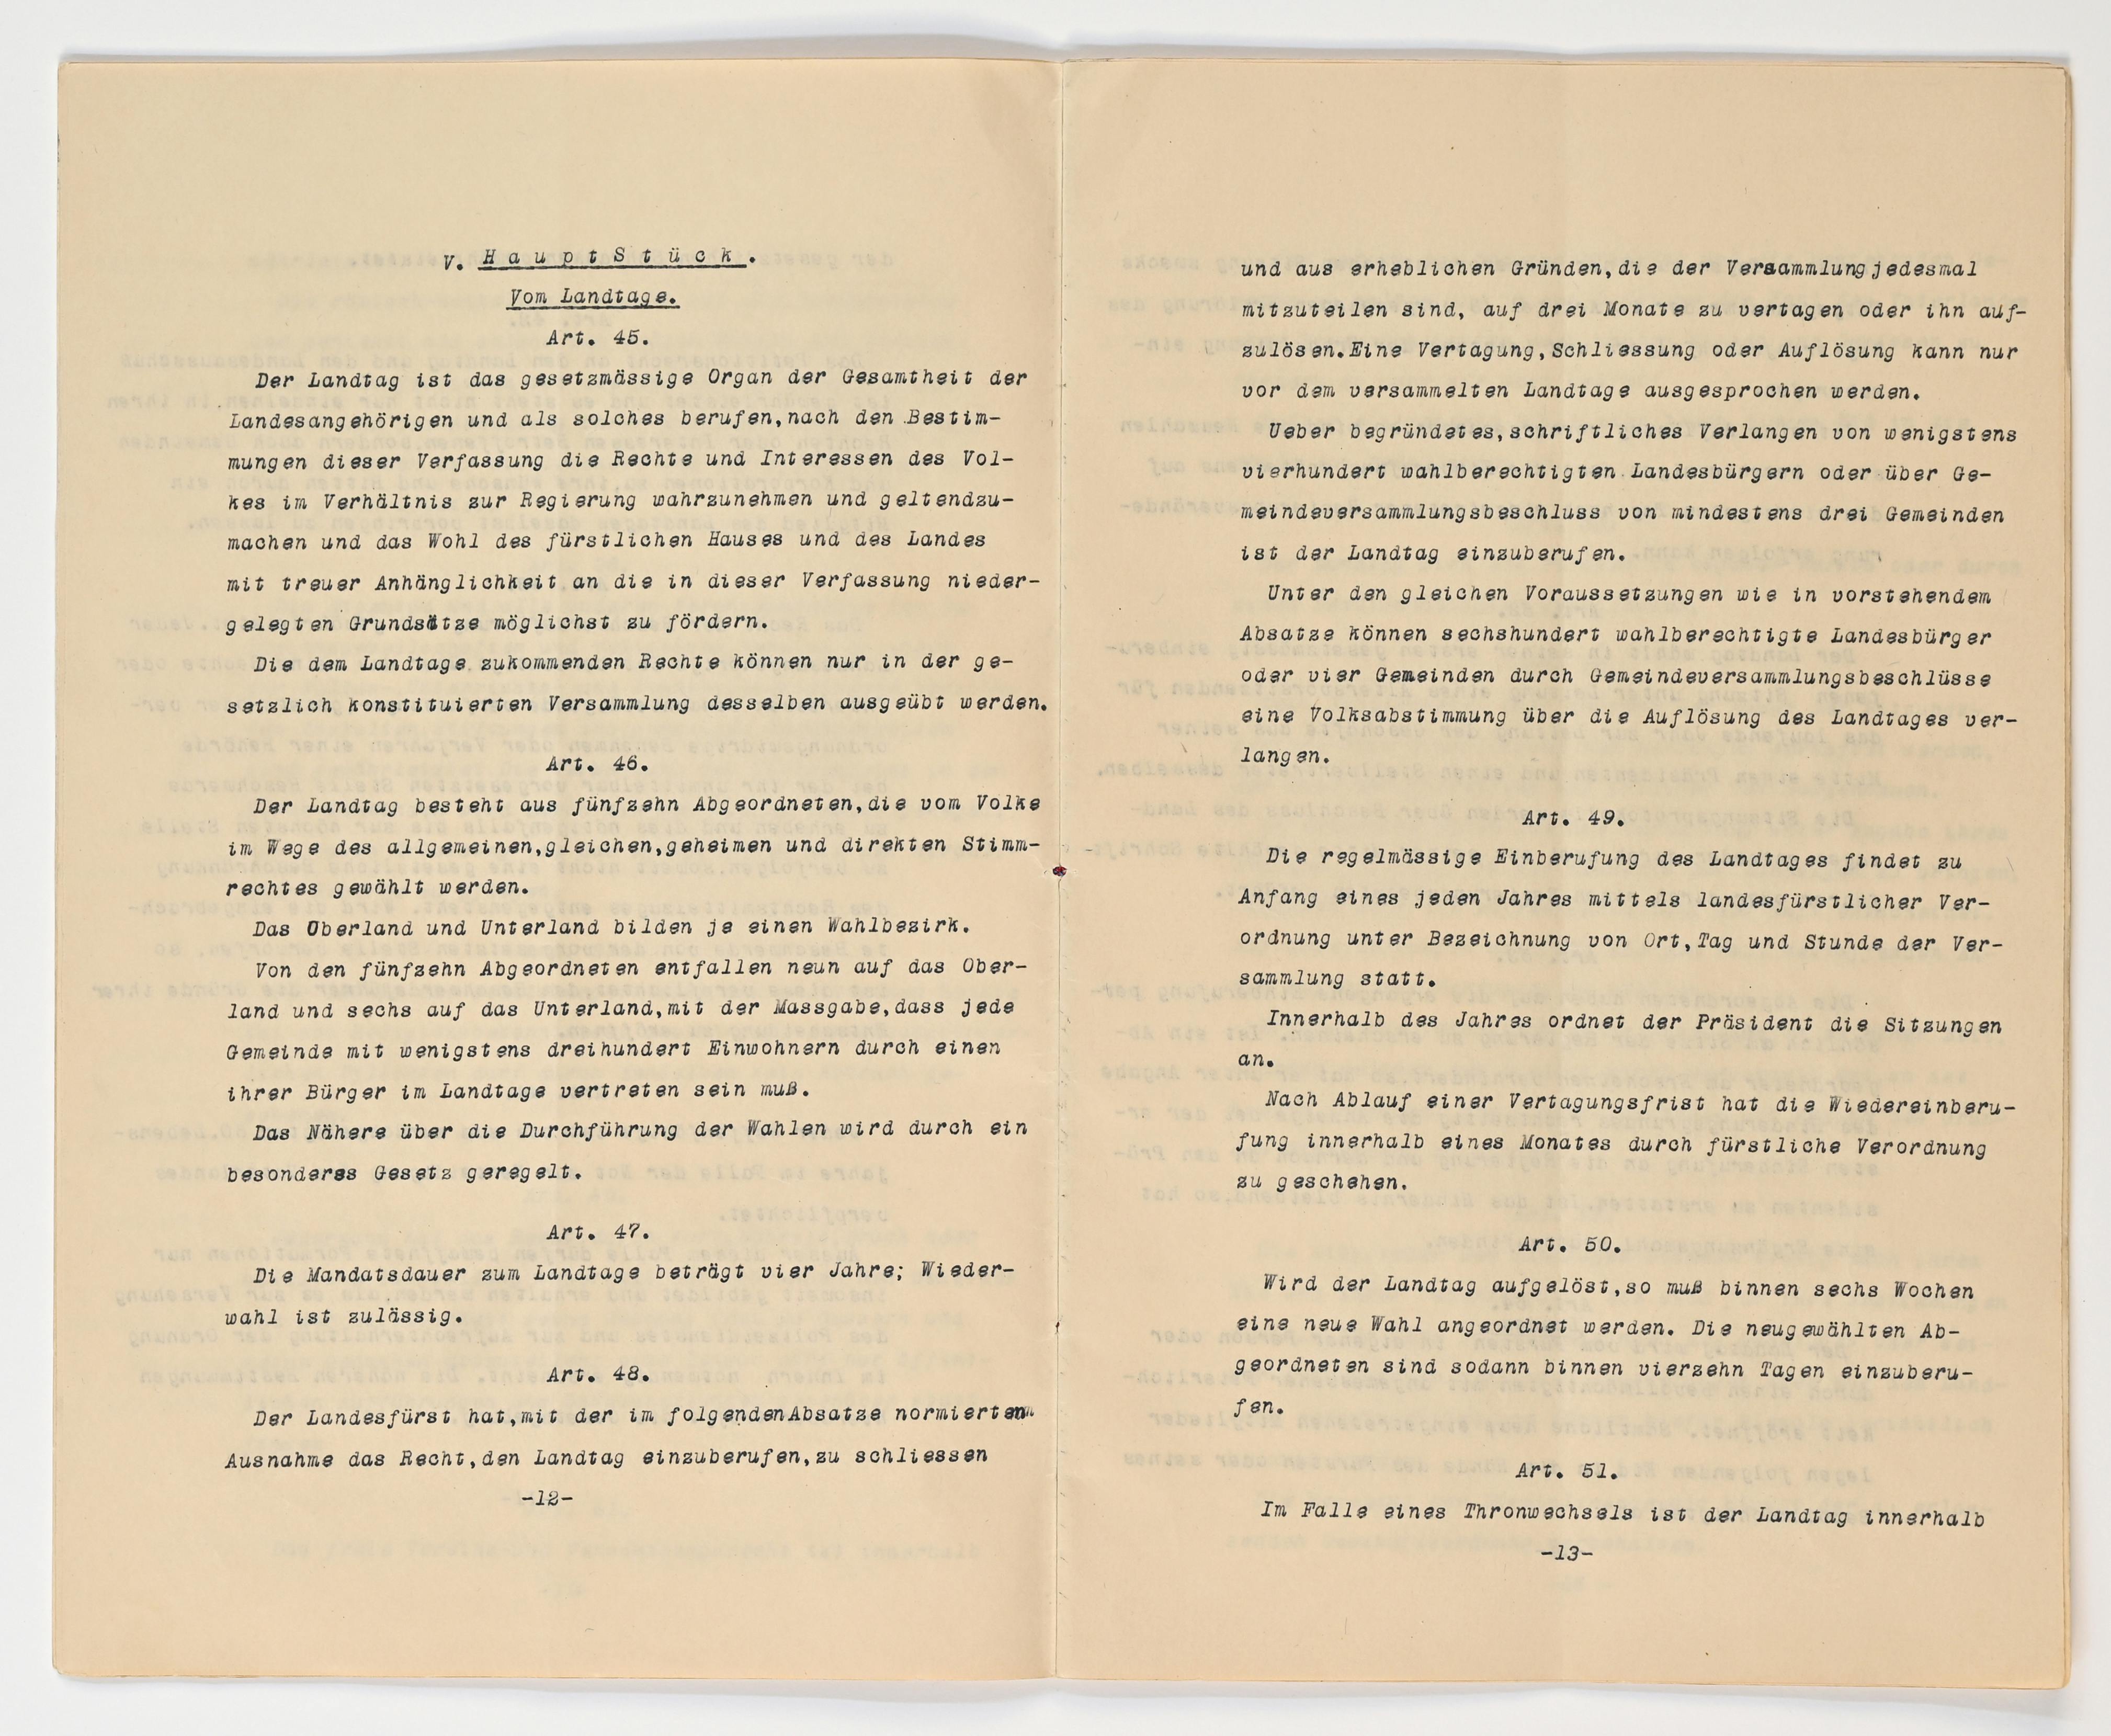 Verfassung 1921 Art. 45 bis Art. 51